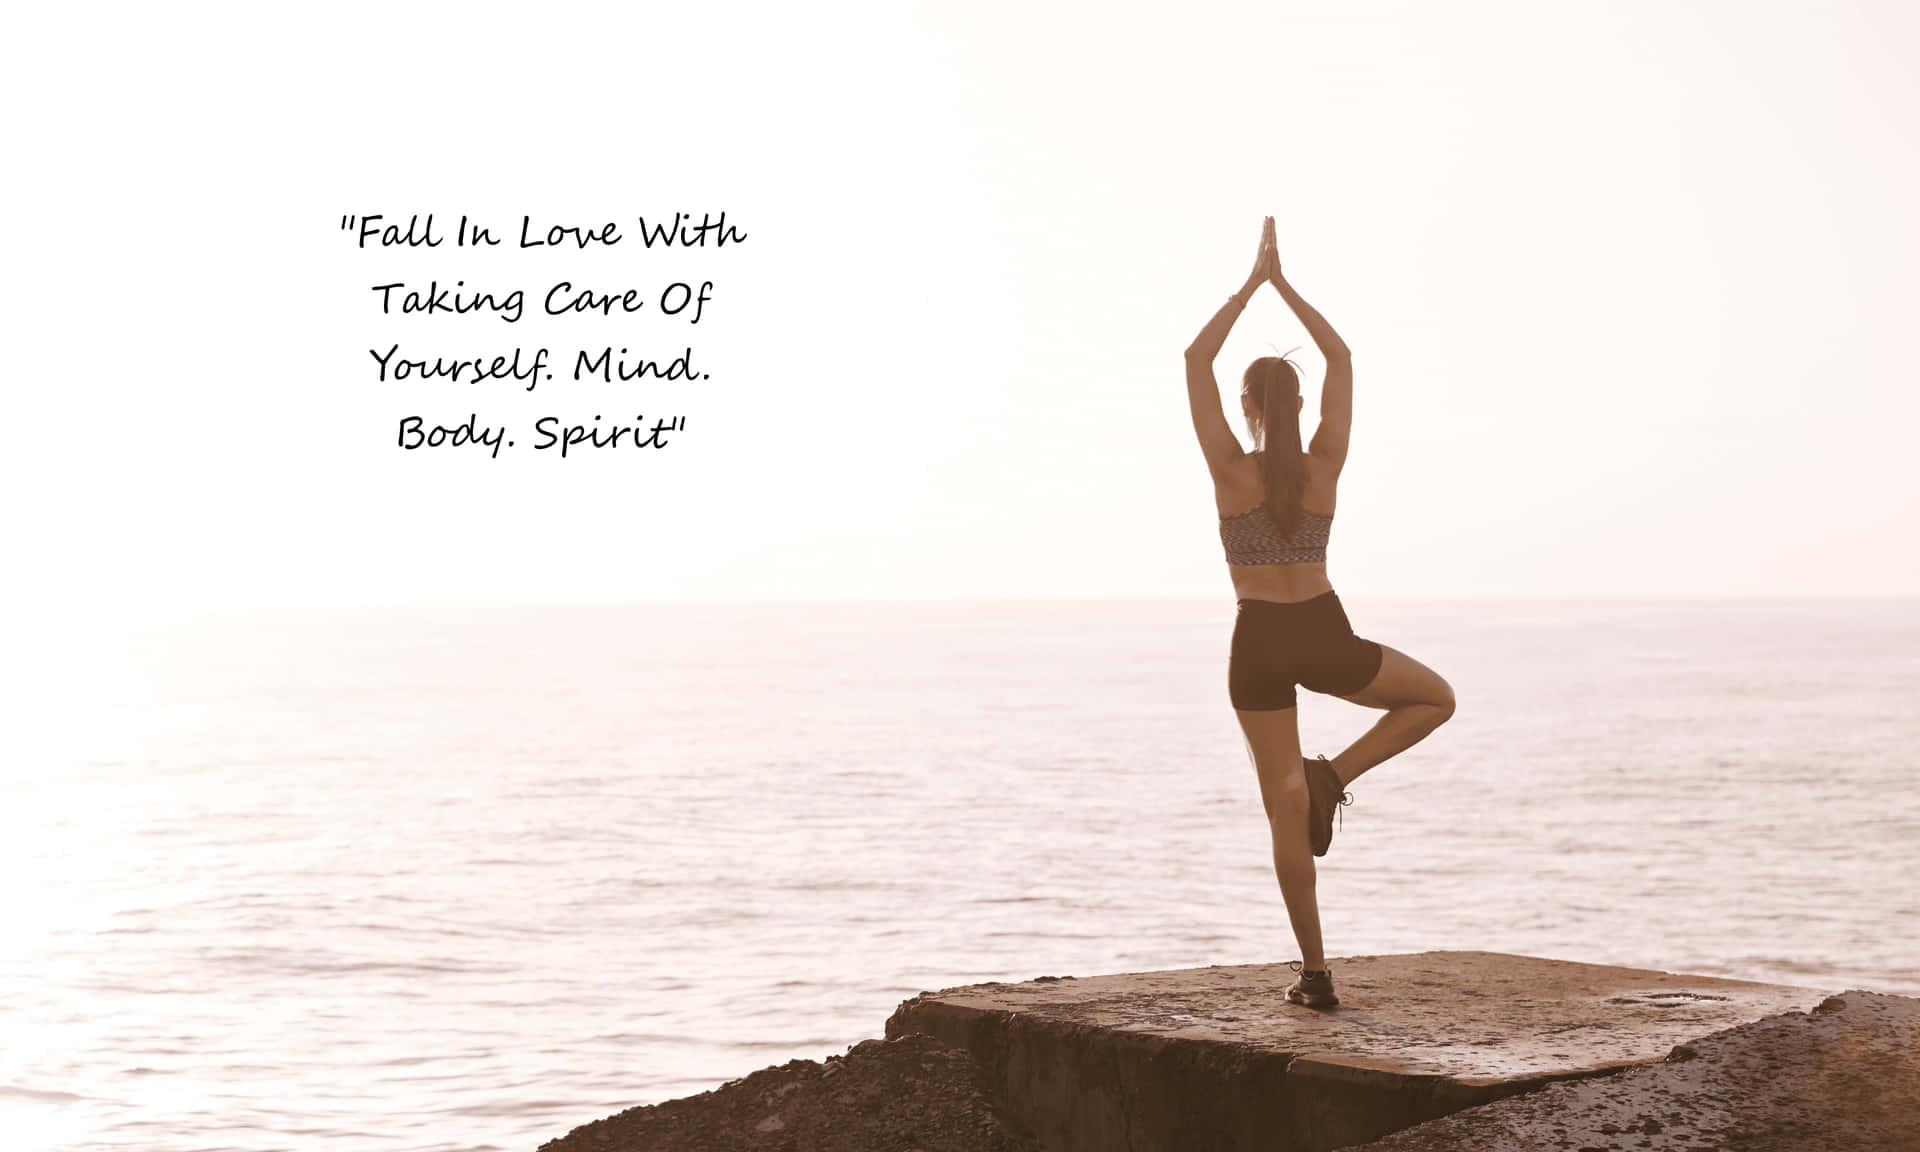 Find inner peace through yoga